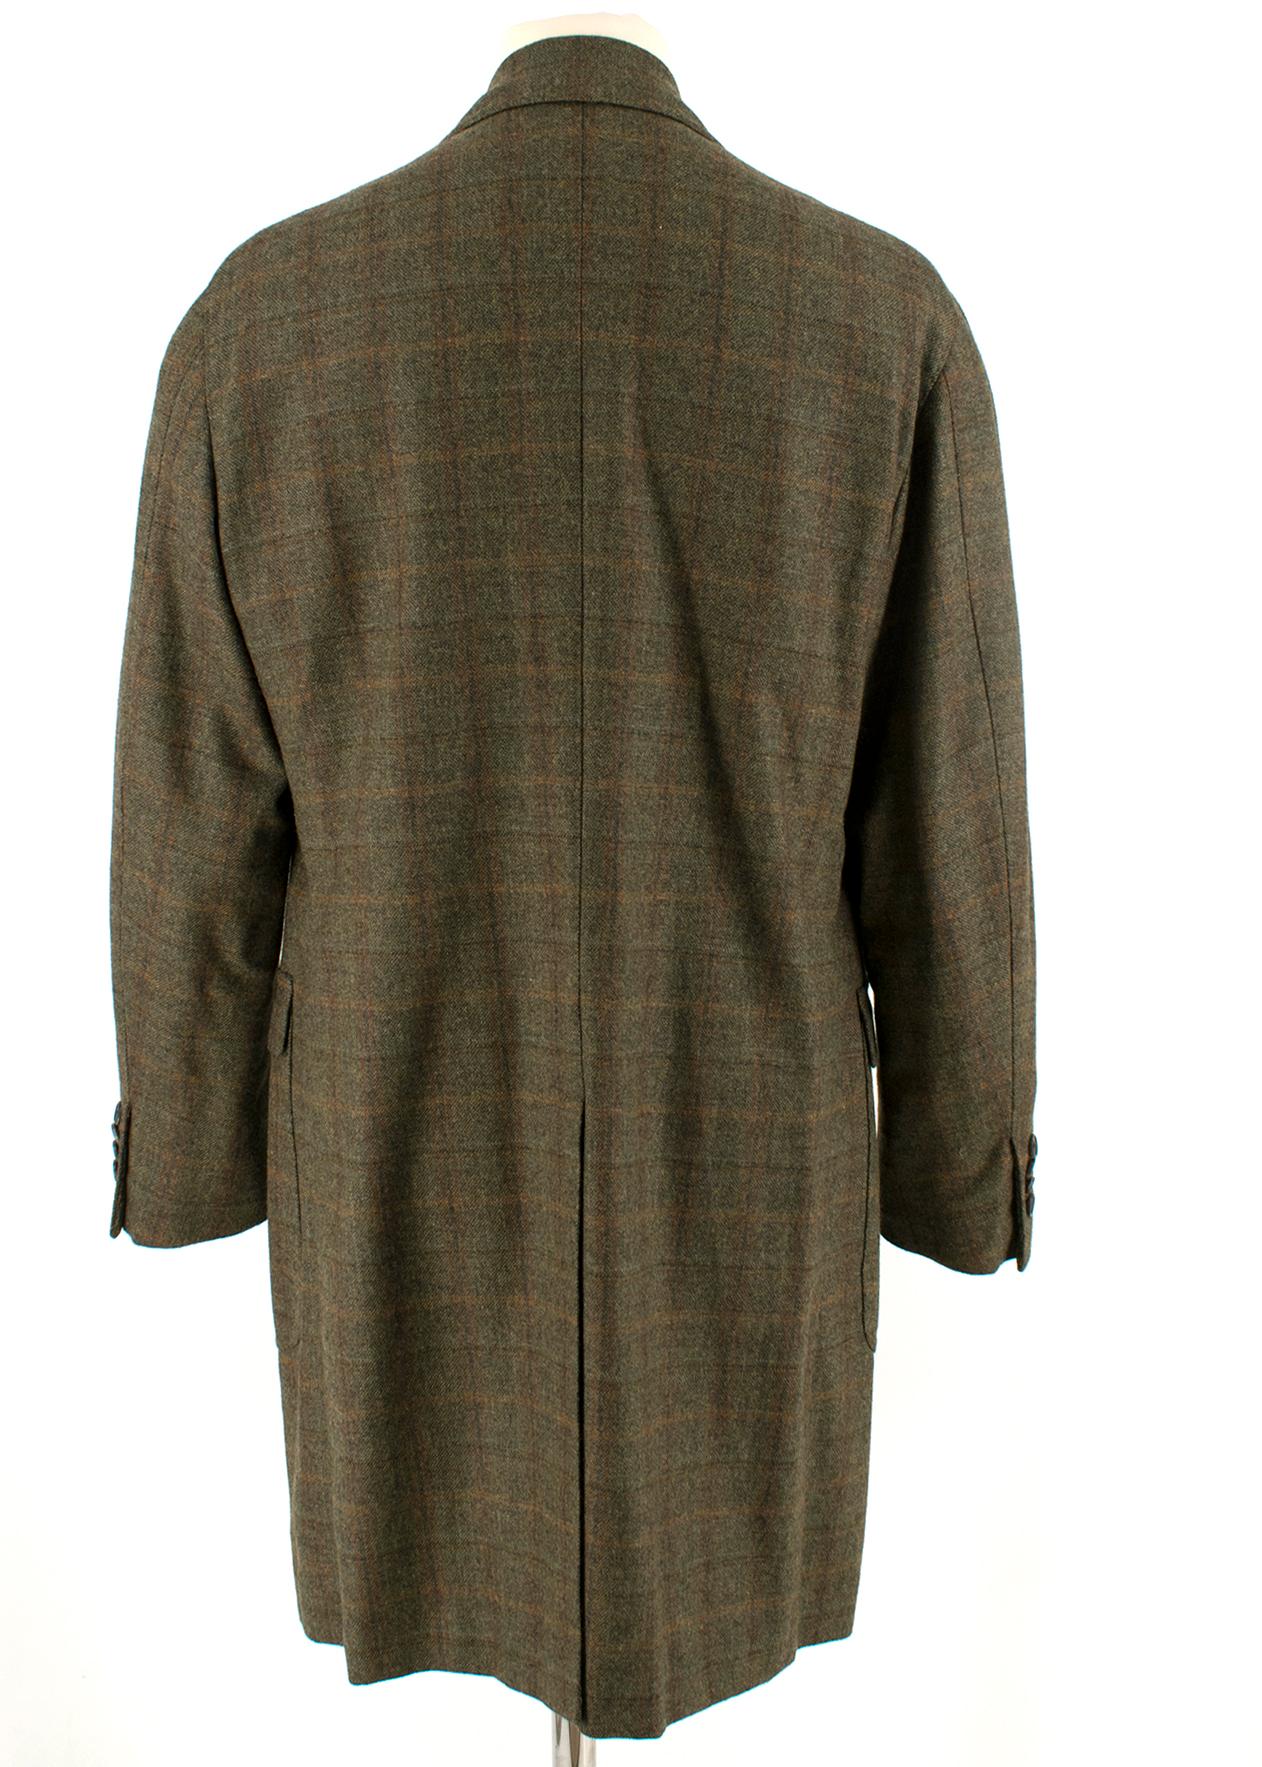 Black Gennano Solito Bespoke Wool Green Checked Coat estimated size L